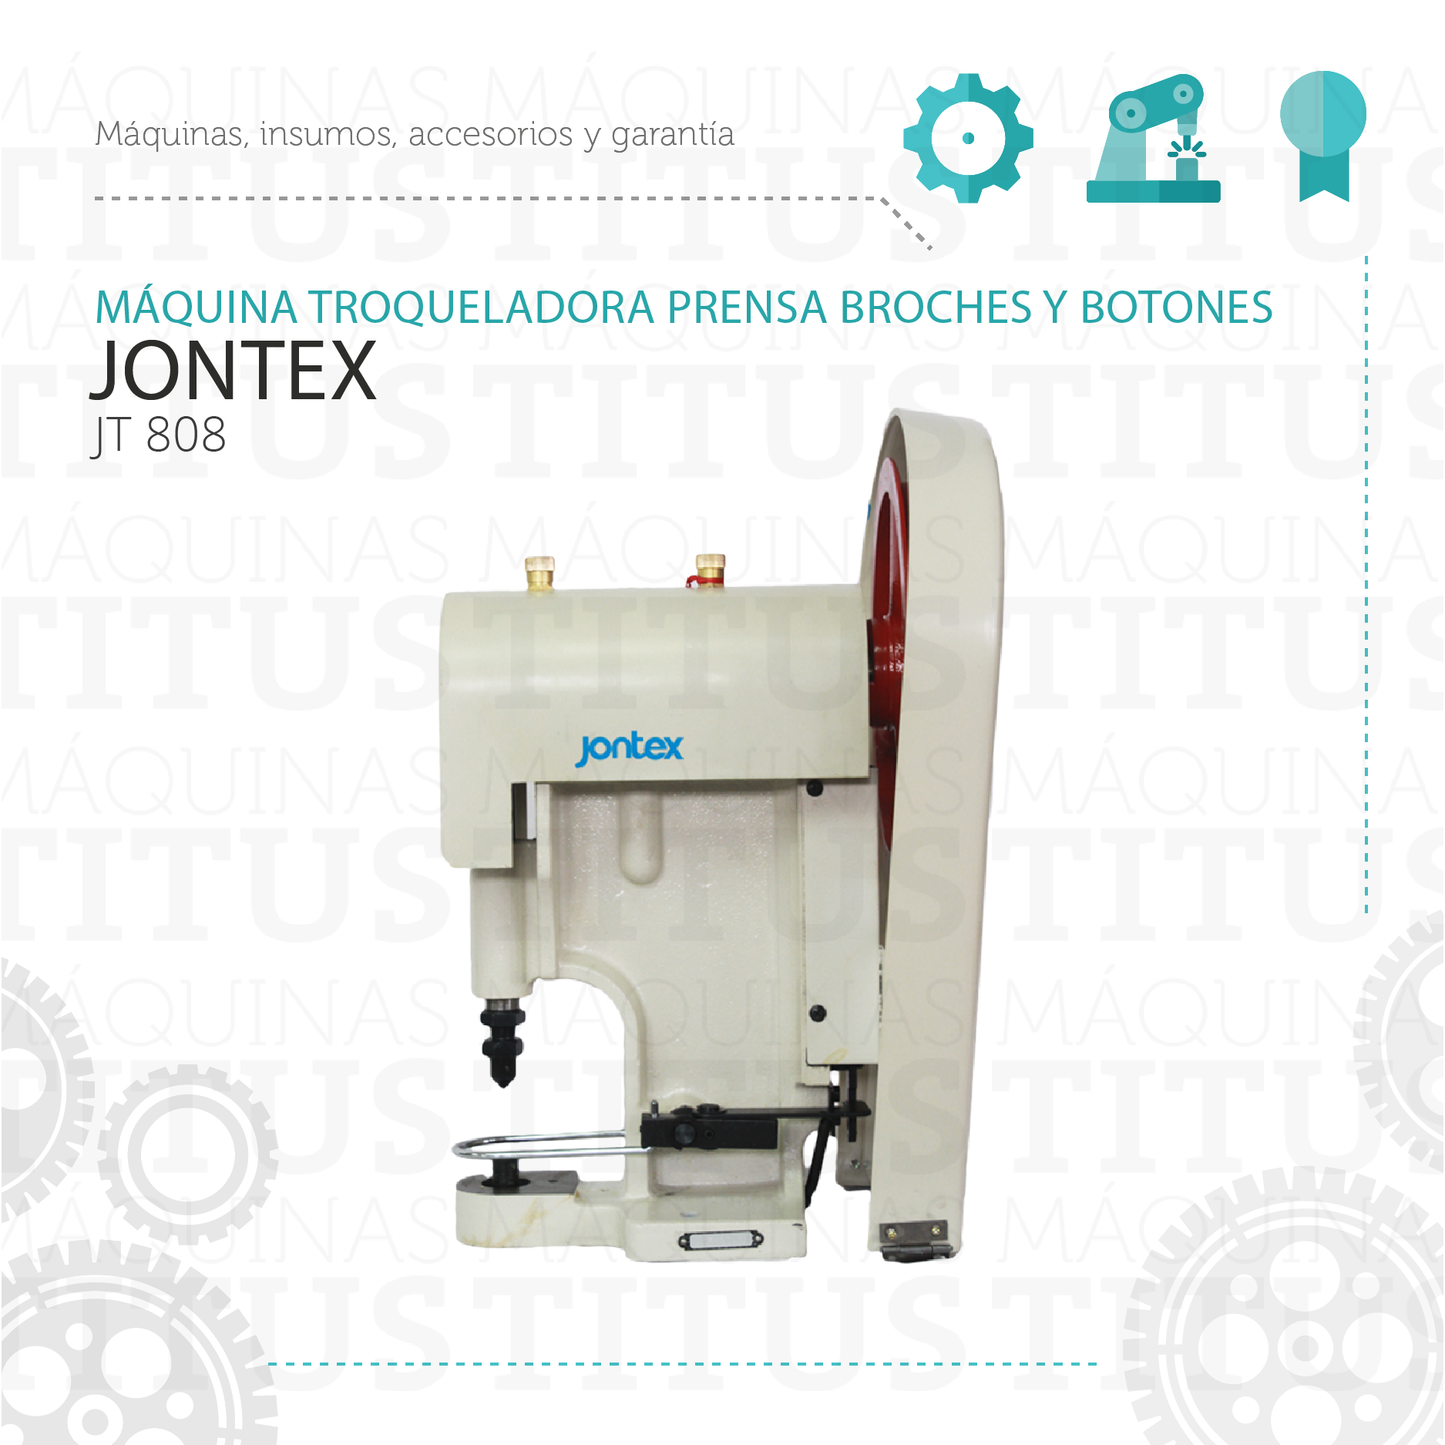 Troqueladora Prensa Motor Jontex JT 808 Broche Botones - Commercio